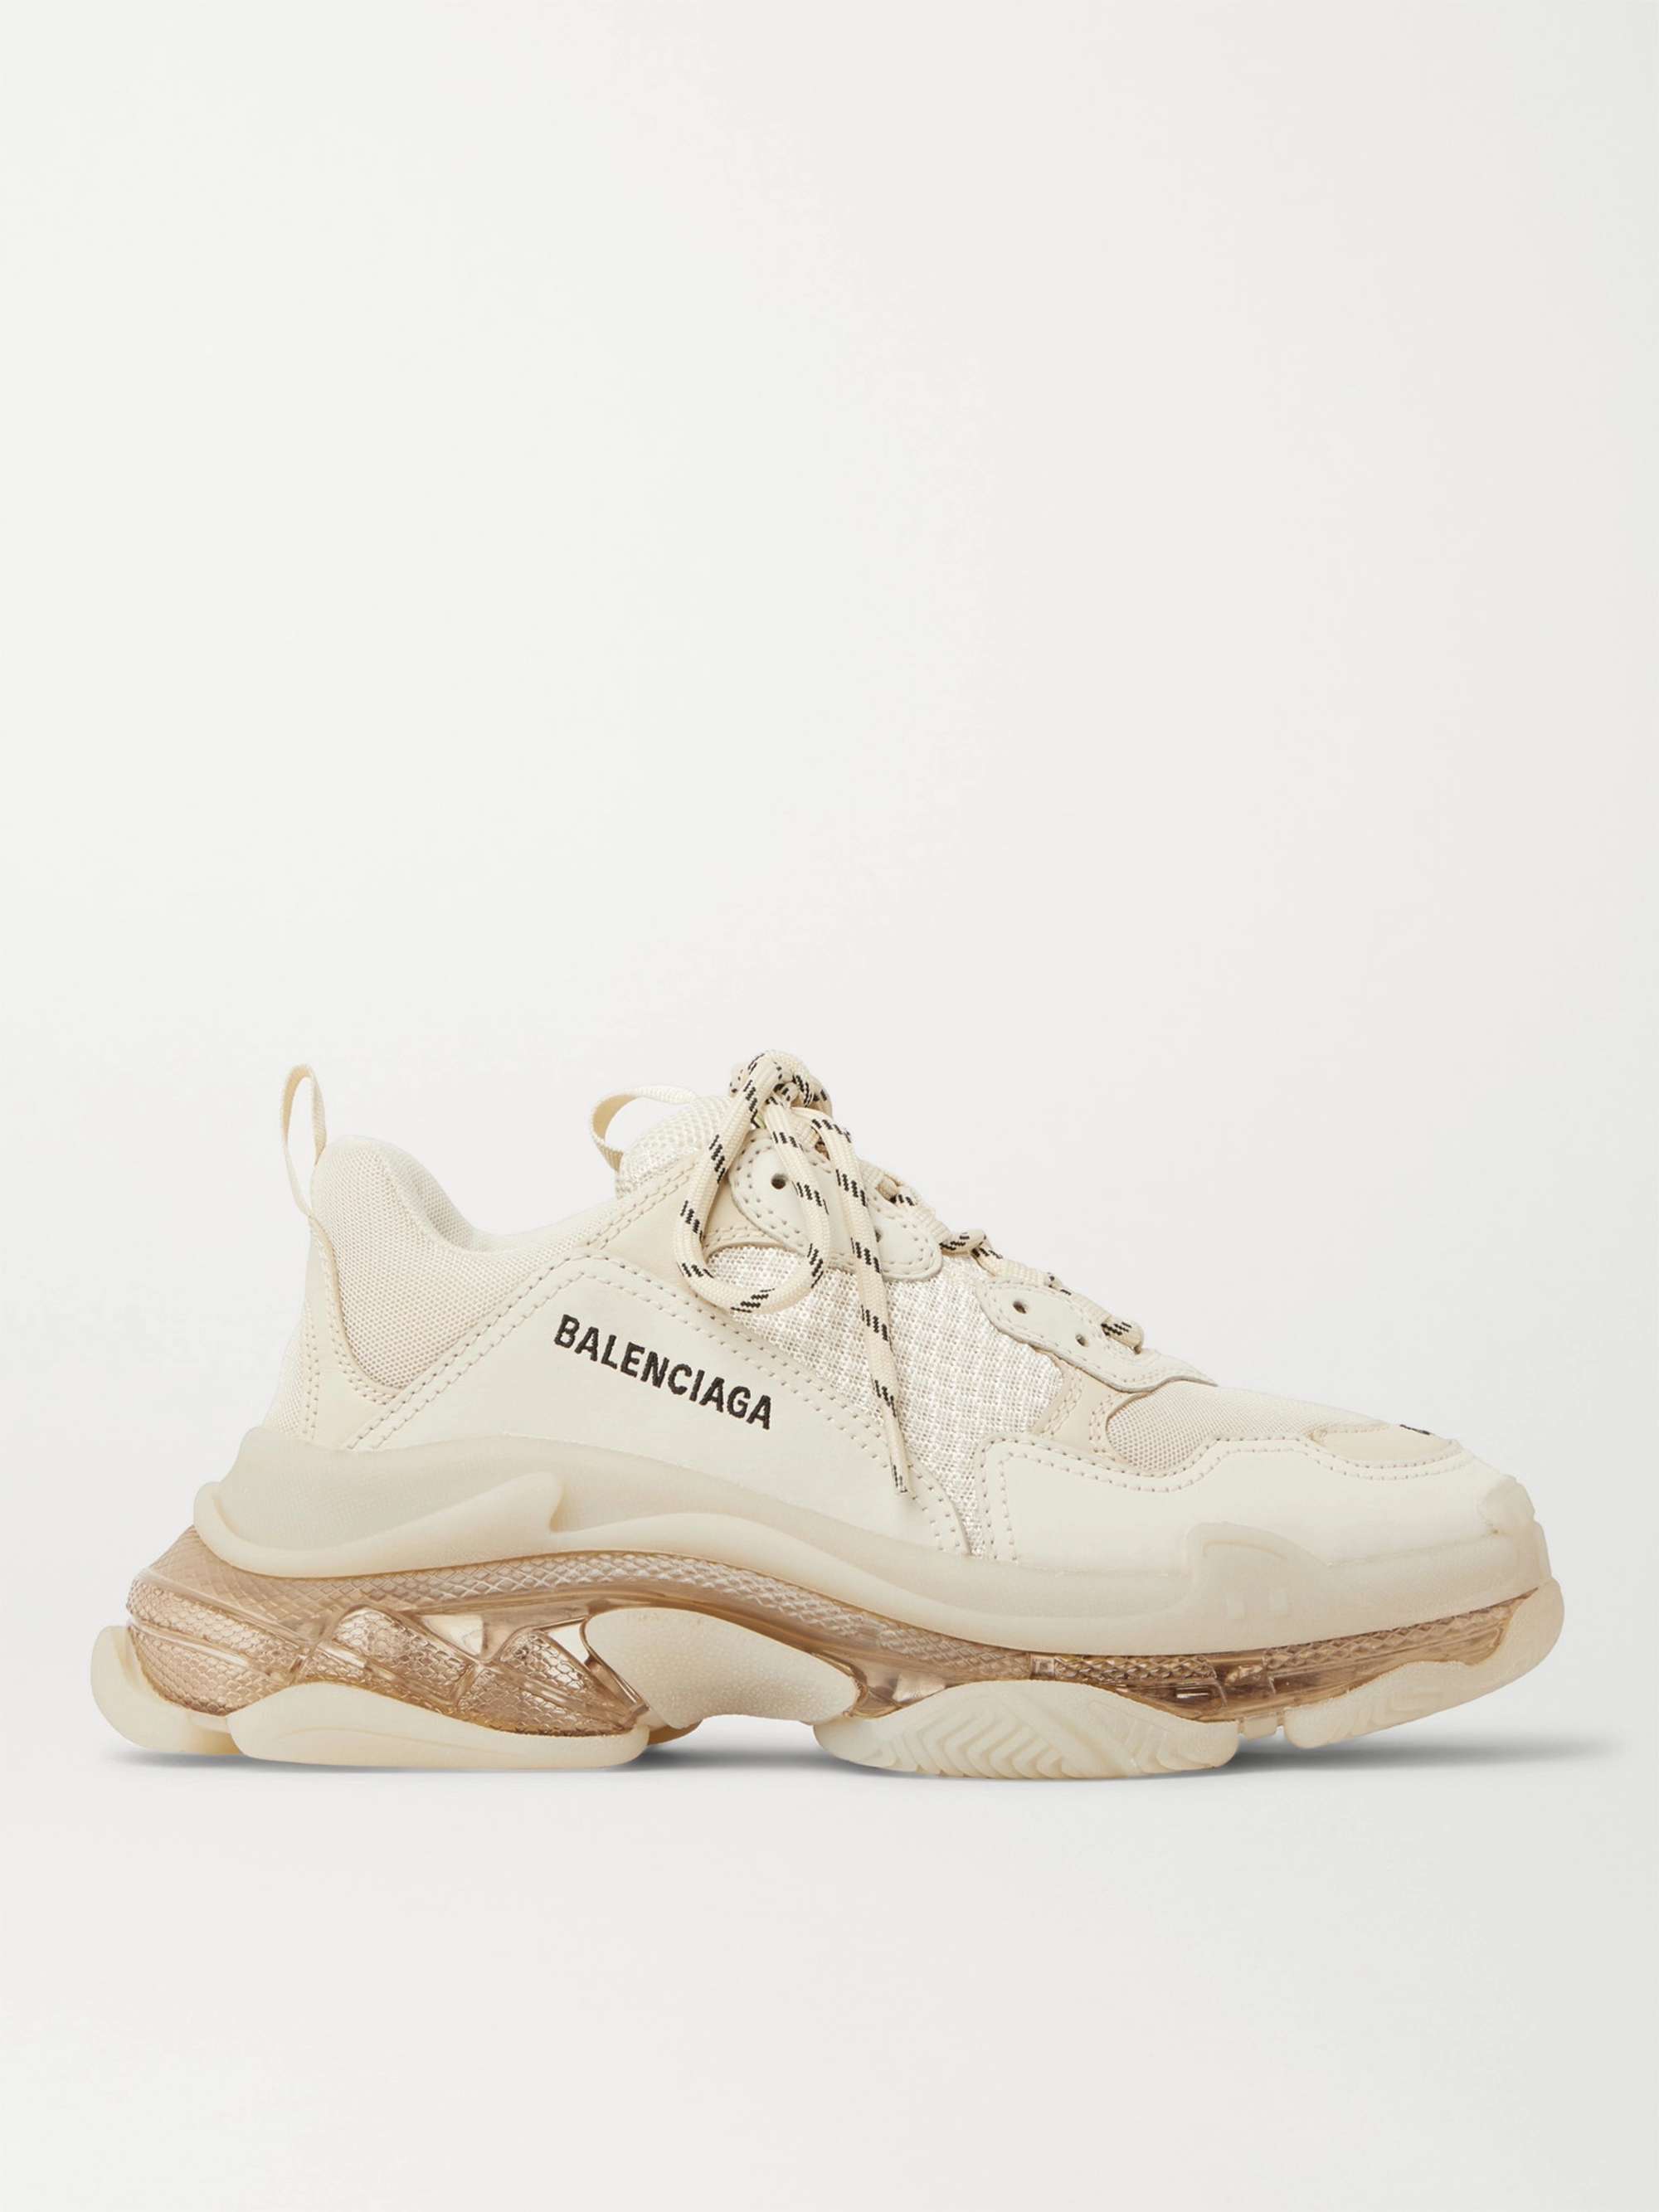 Balenciaga Triple S Women039s White Clear Sole Sneakers New  eBay